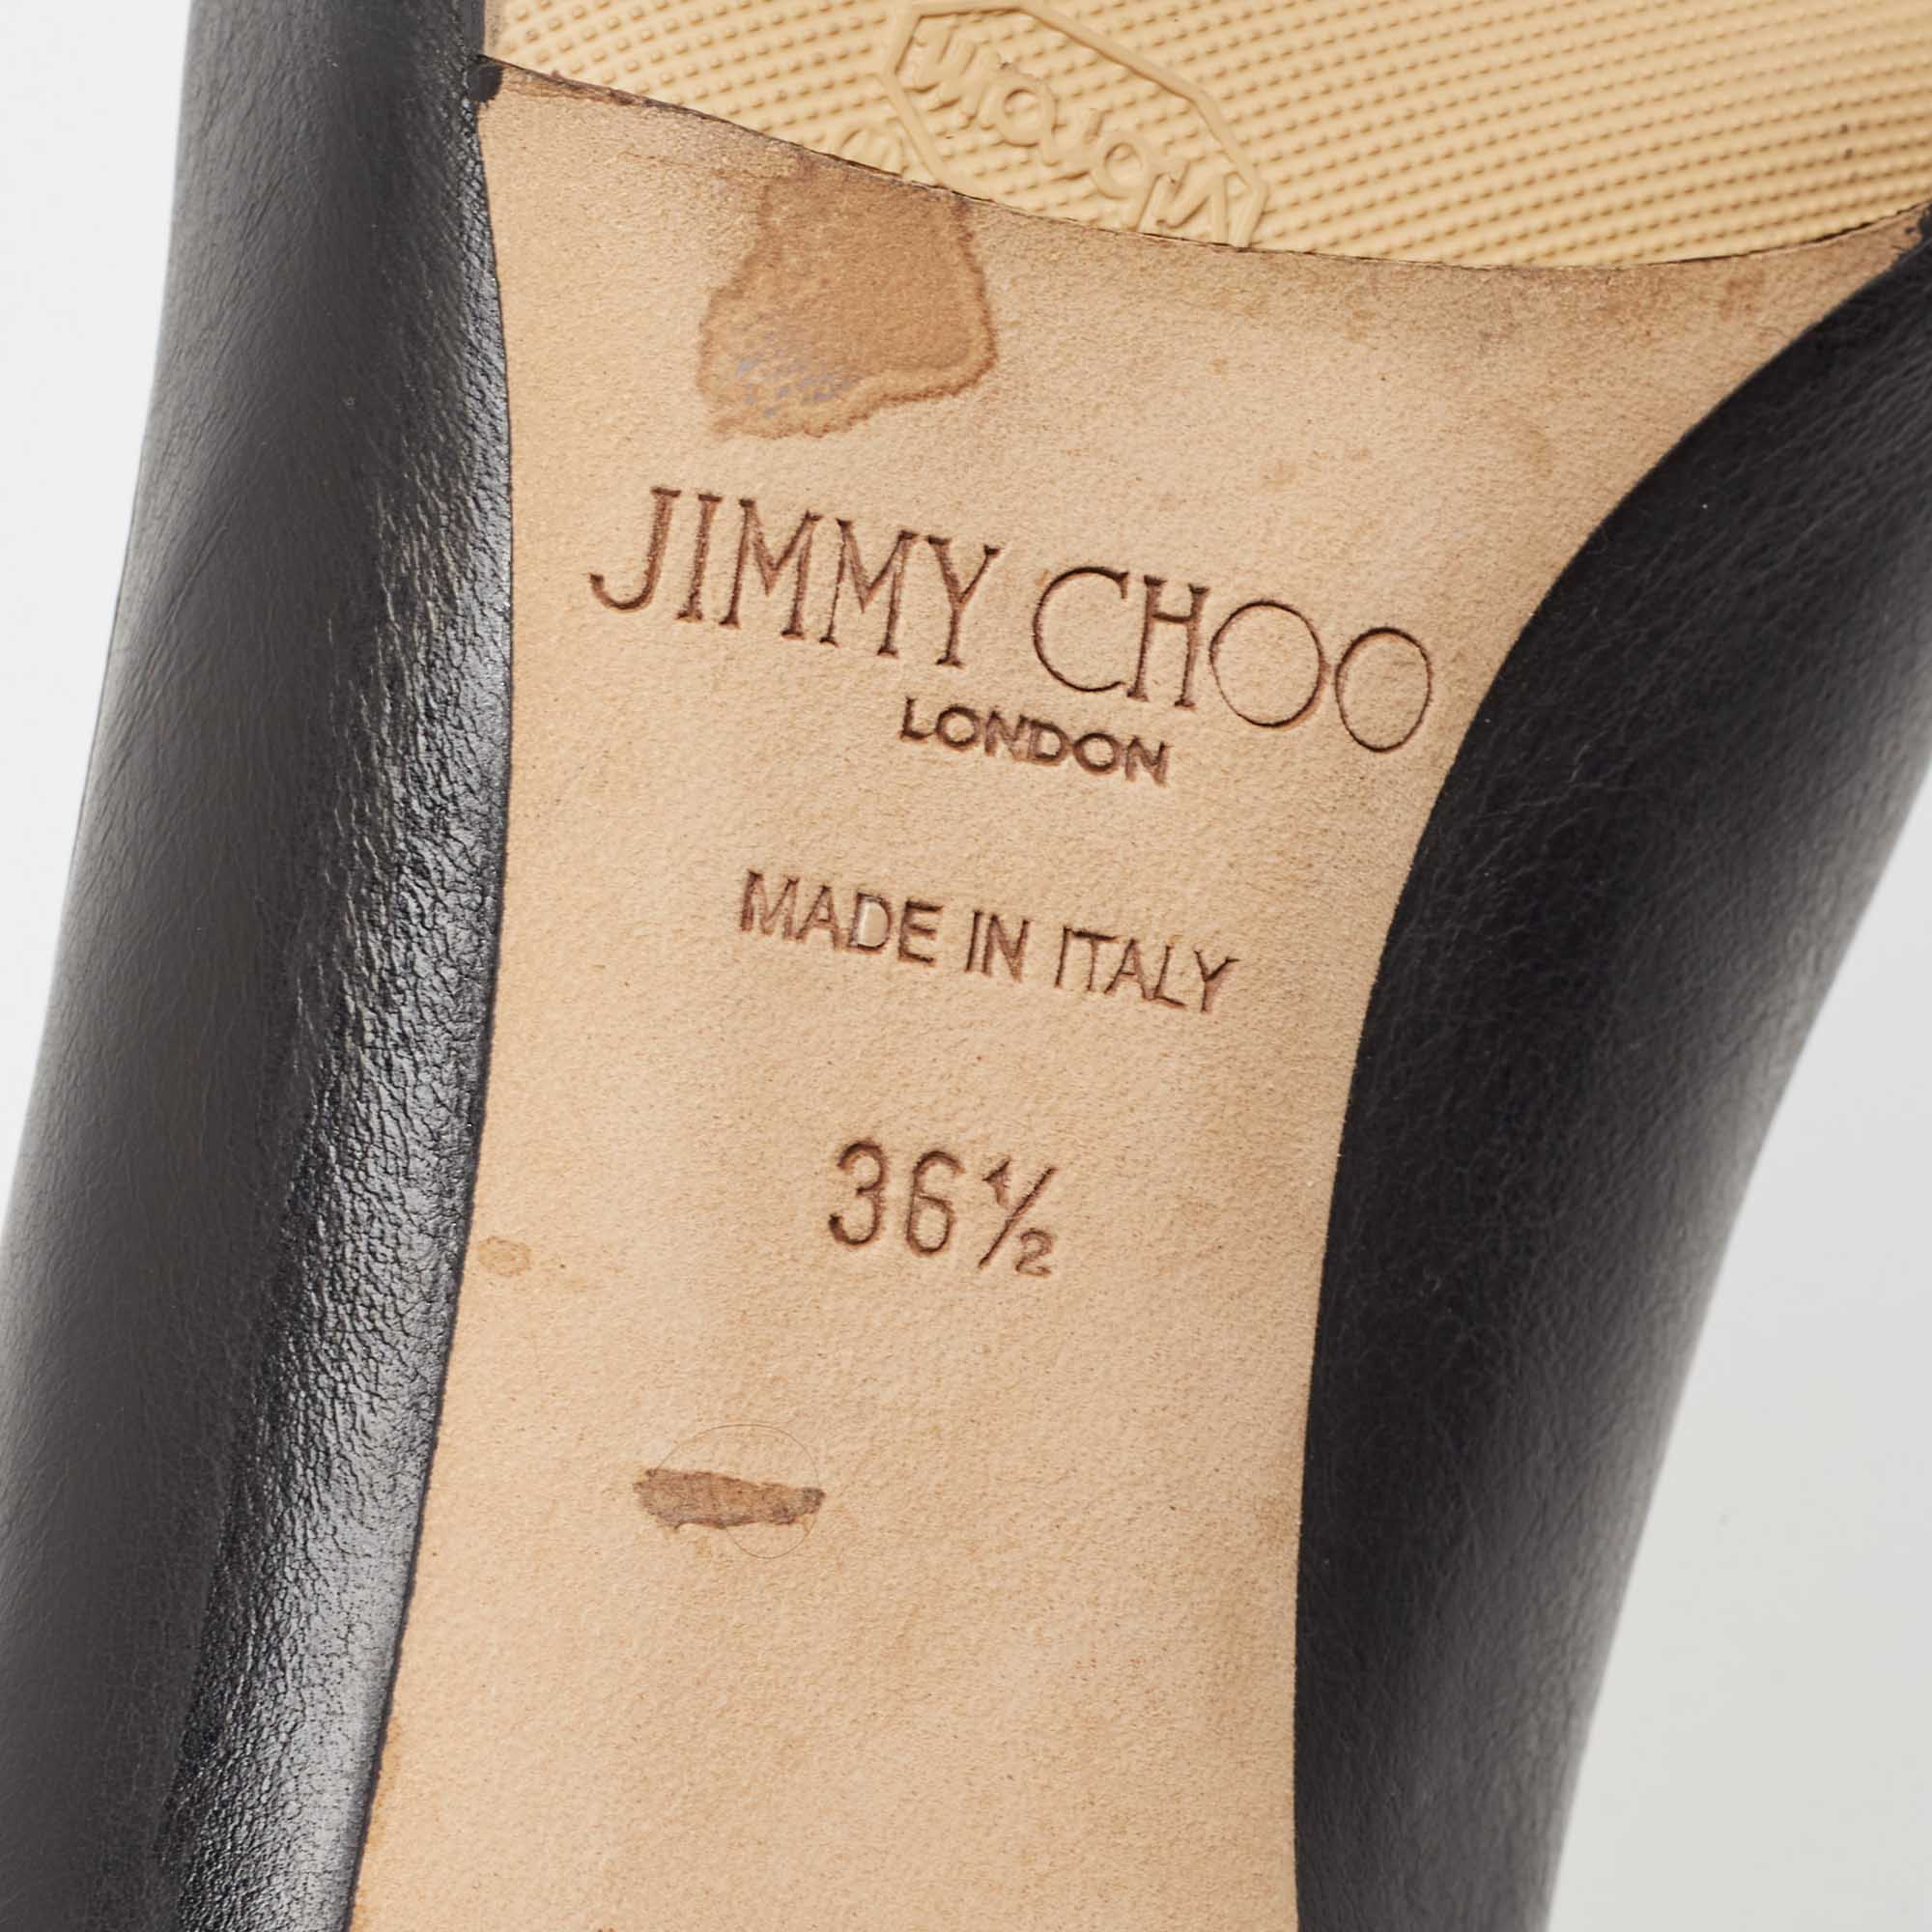 Jimmy Choo Black Leather Allure Pumps Size 36.5